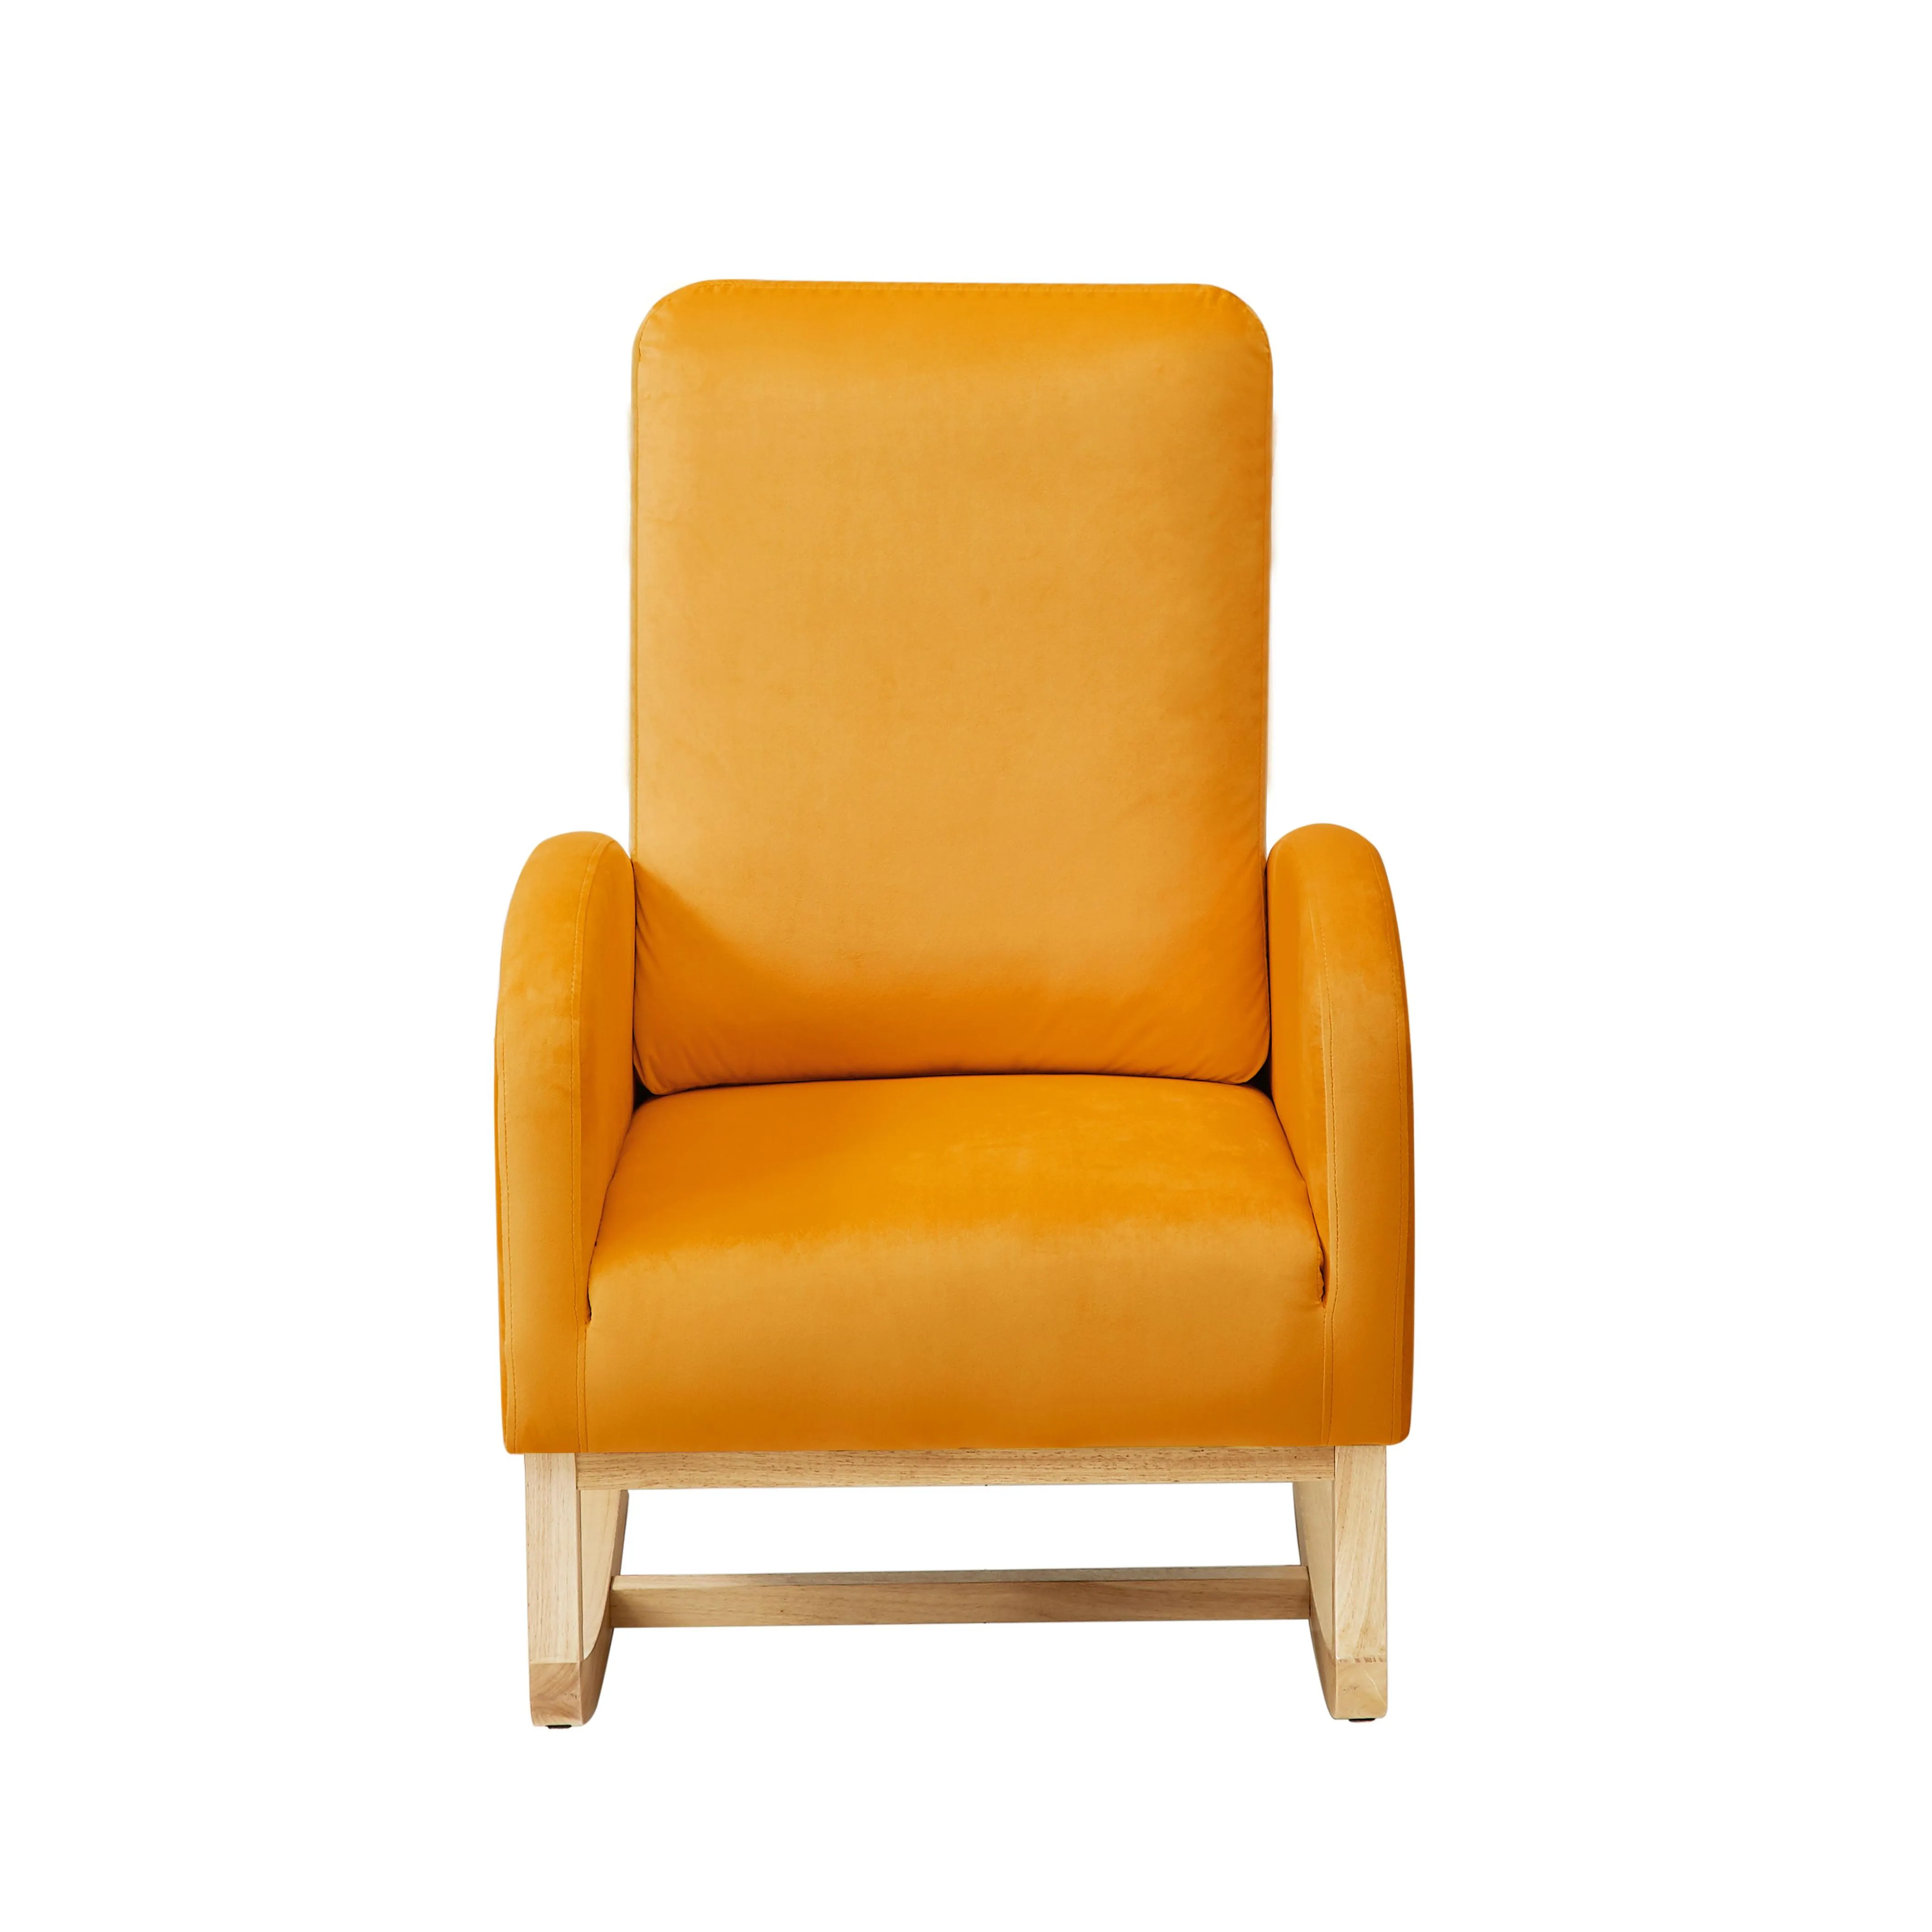 Rocking Chair Mid-Century Modern Rocking Armchair Upholstered Tall Back Accent Glider Rocker,Orange